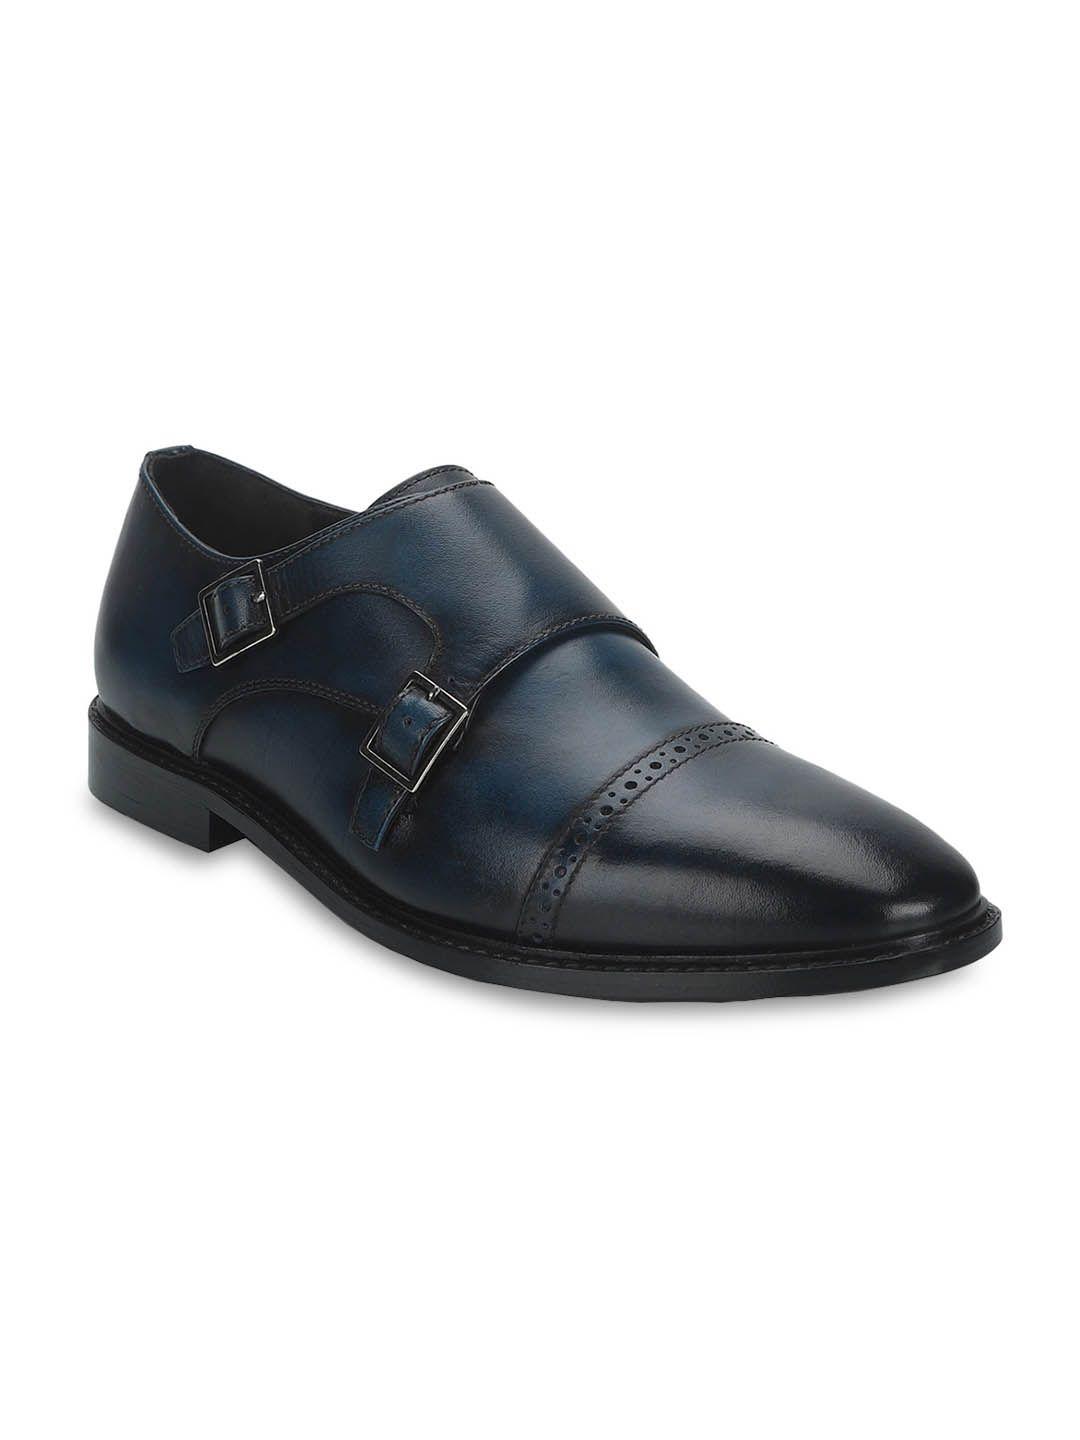 saint g men navy blue solid leather formal monk shoes